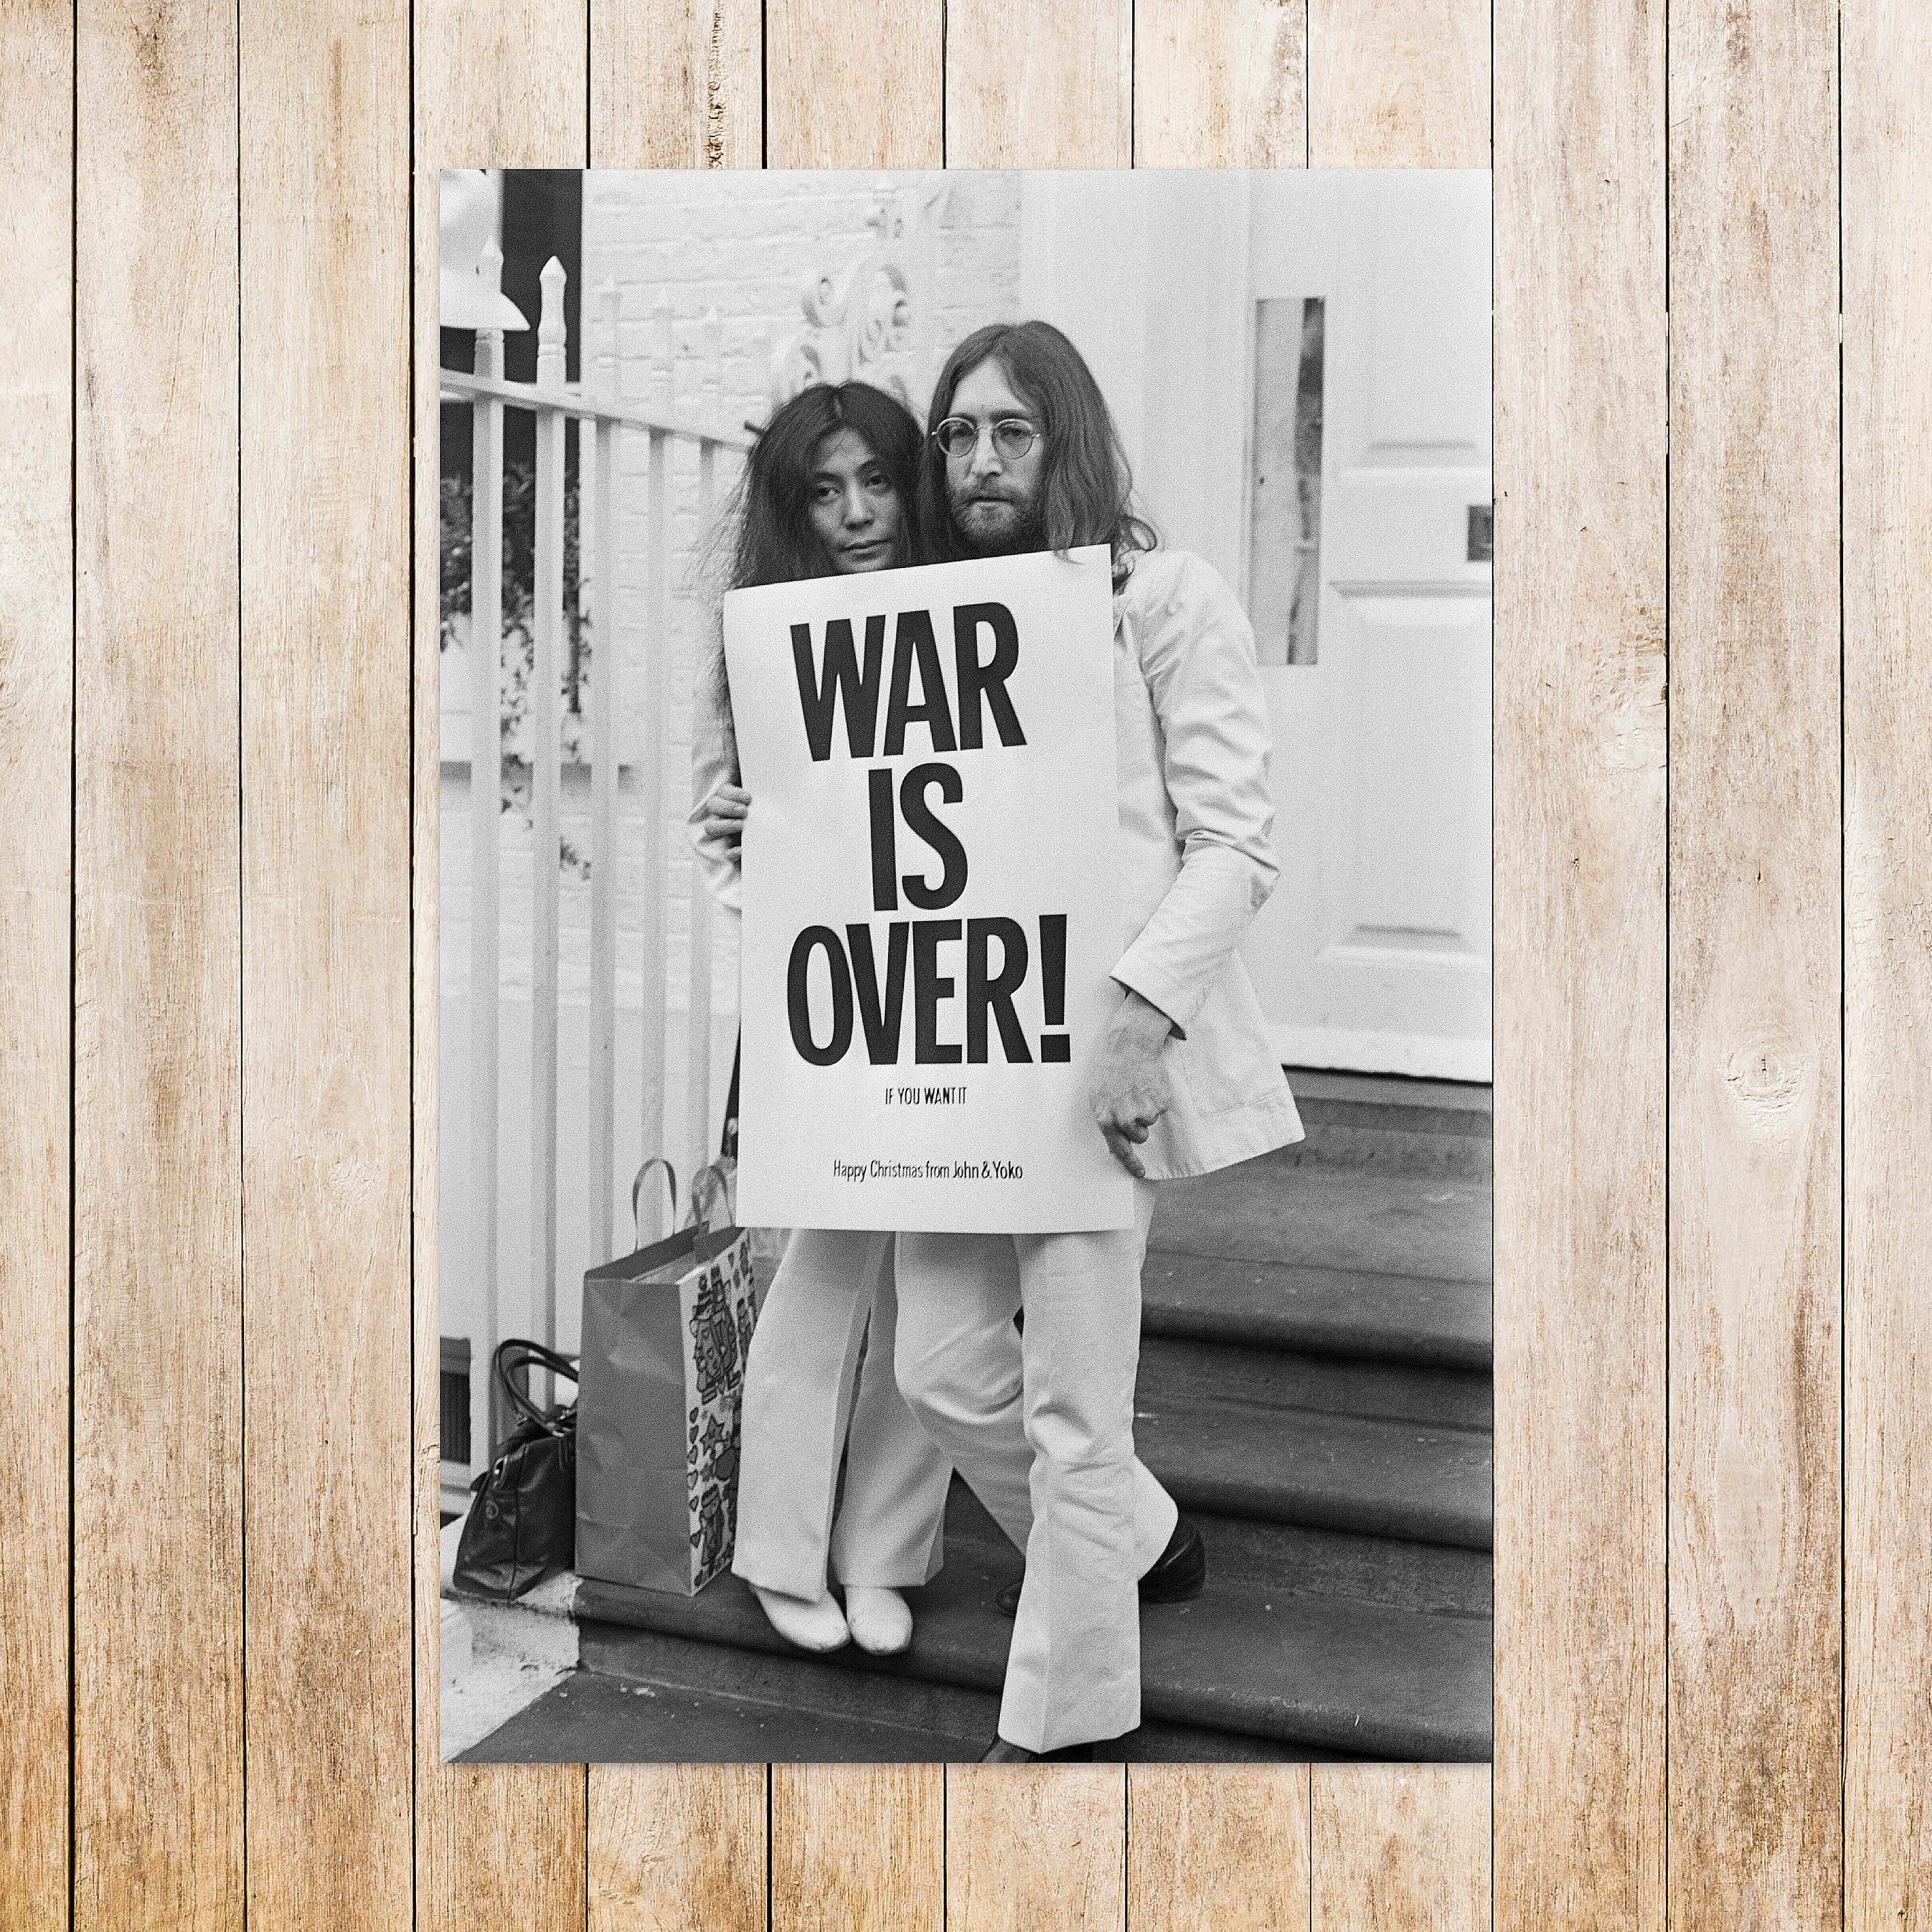 John Lennon, Yoko Ono War is Over 1969 original UK poster : Pleasures of  Past Times